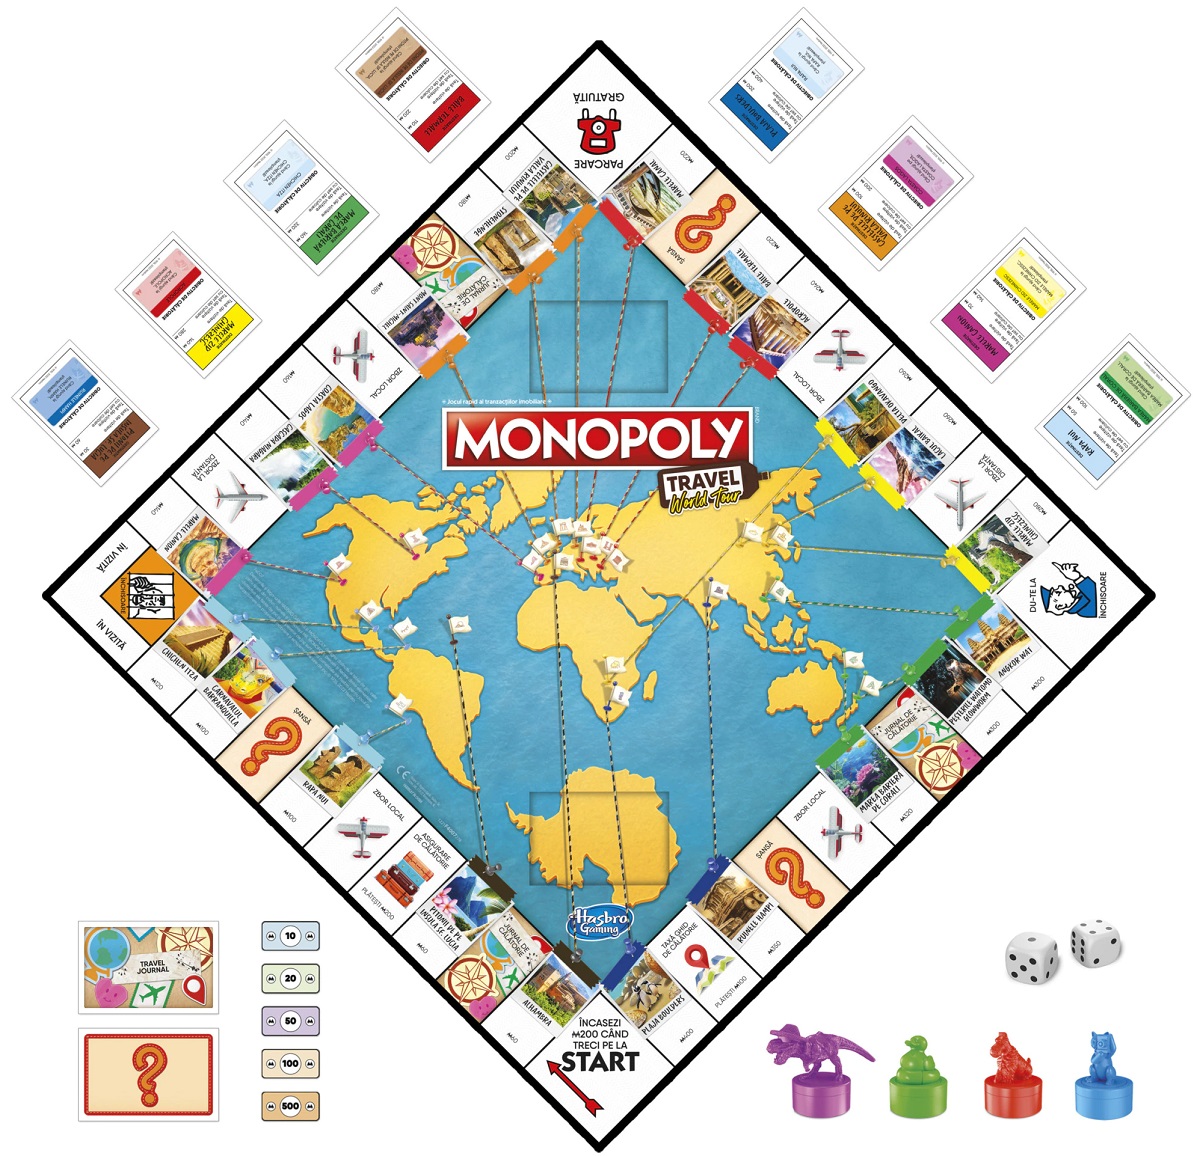 Monopoly calatoreste in jurul lumii